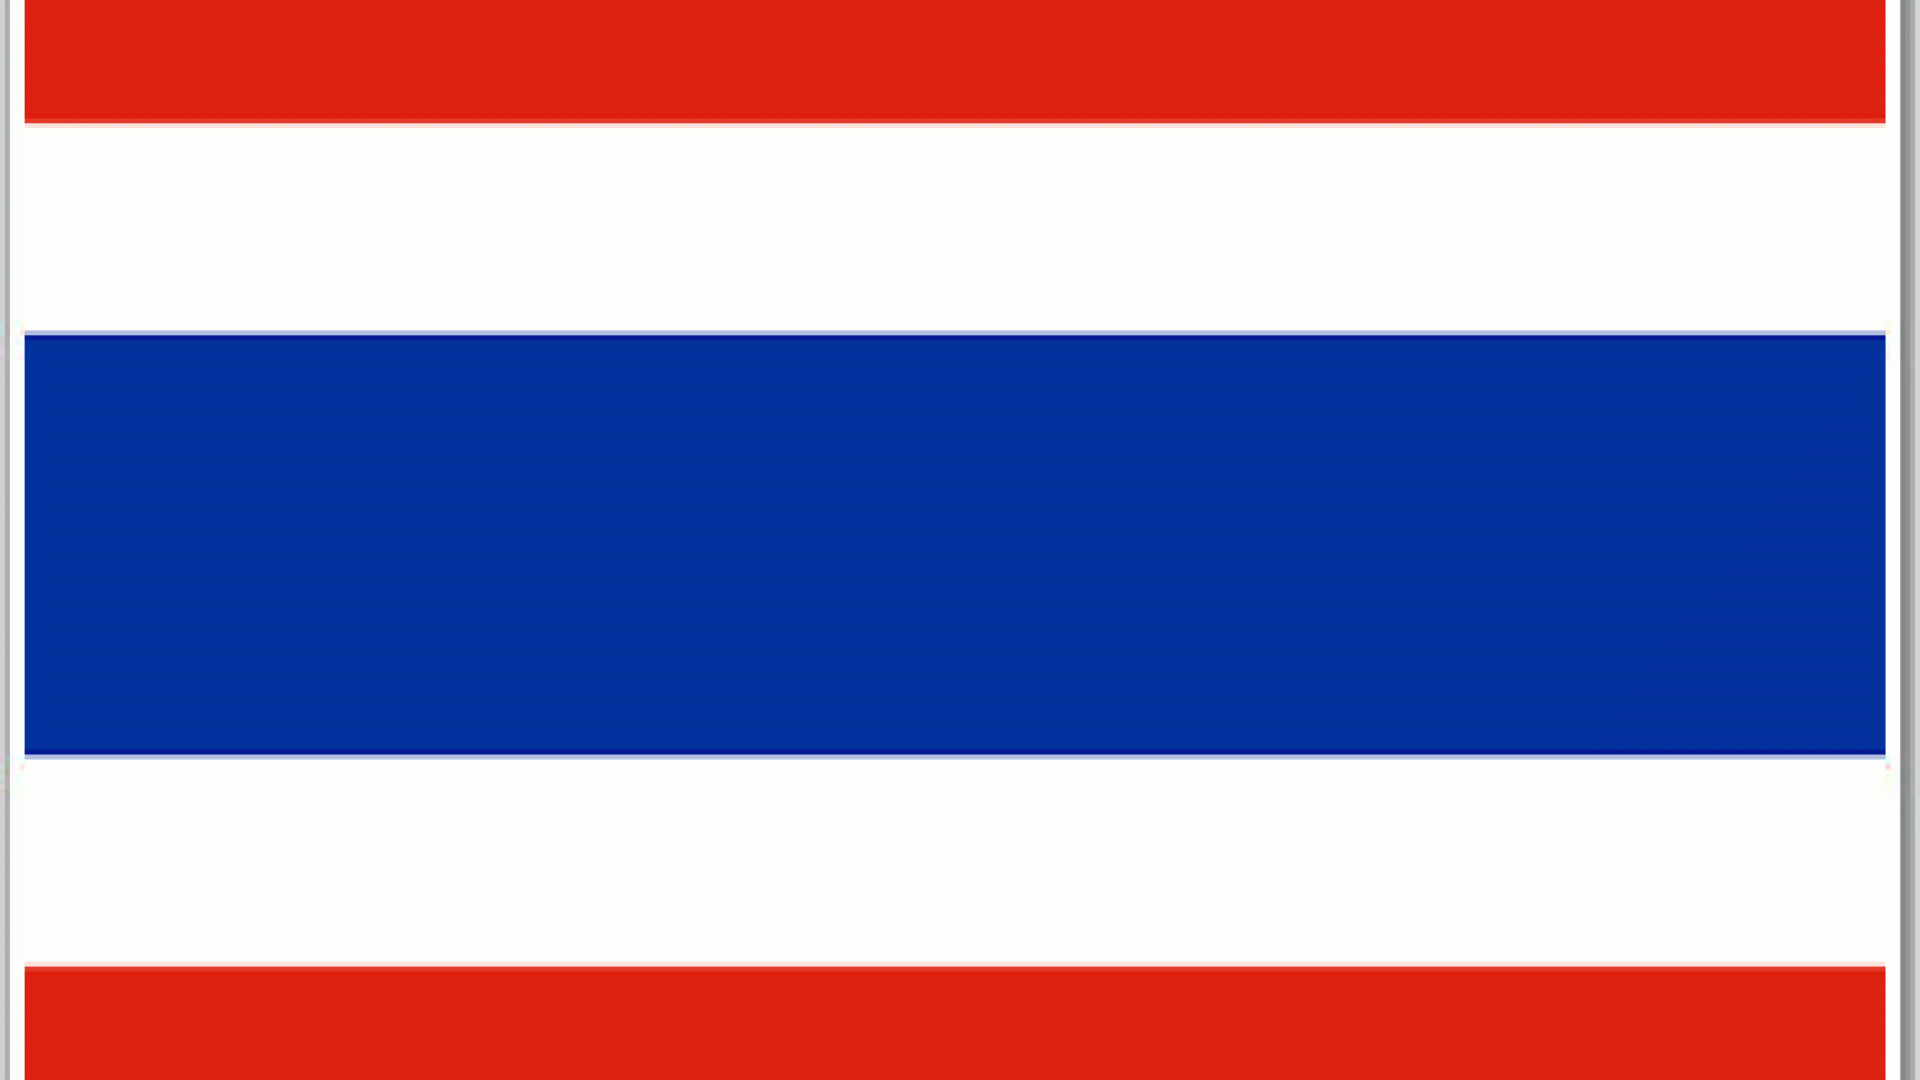 33-cover-thailand-flag